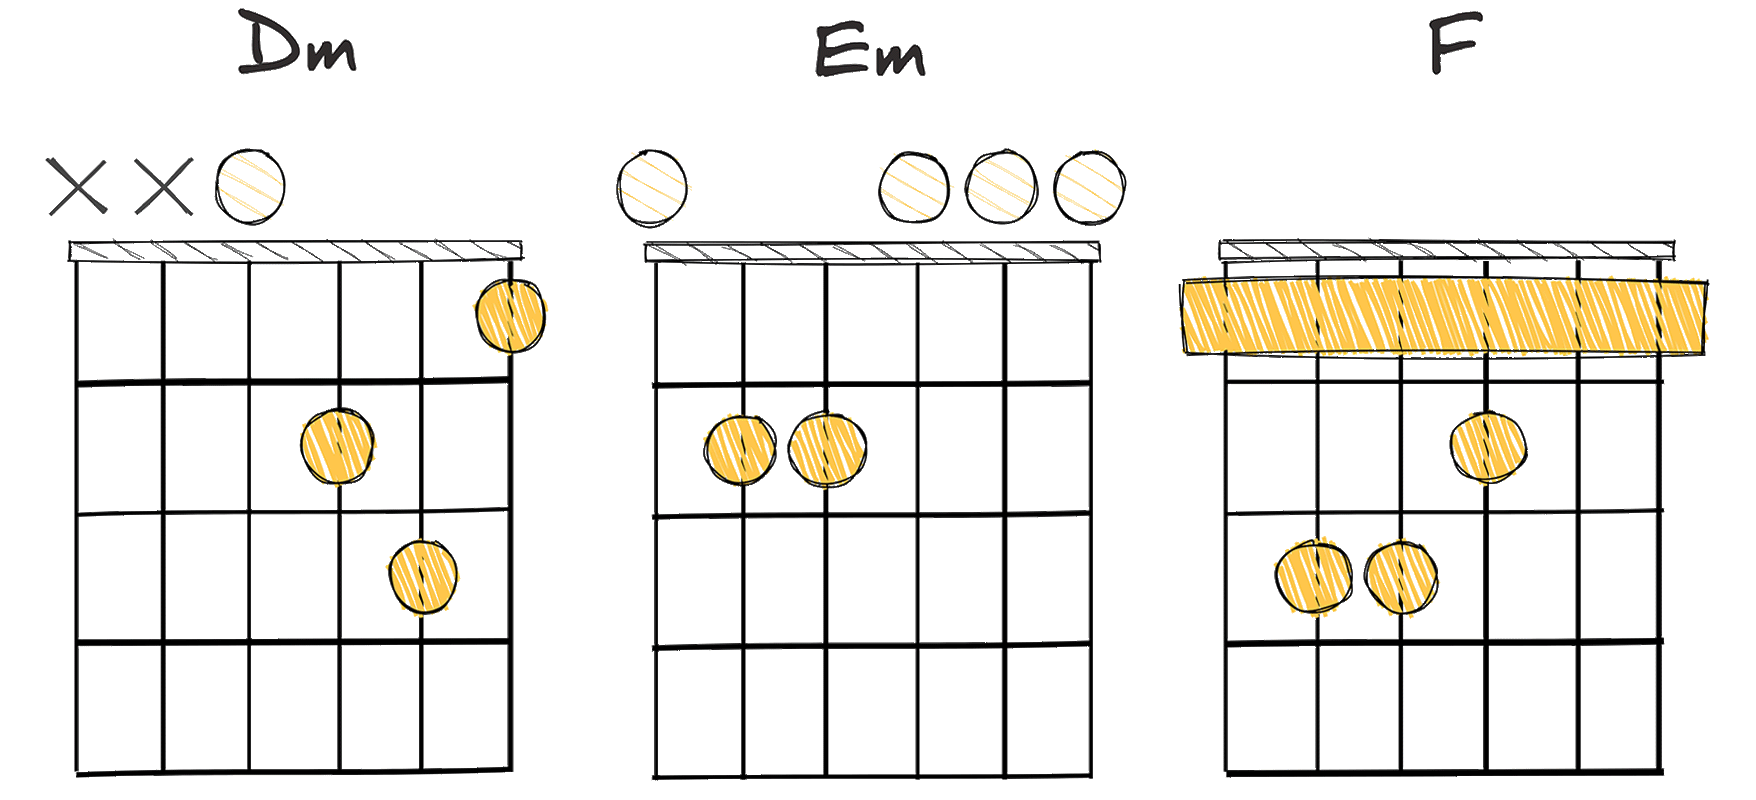 ii - iii - IV (2-3-4) chords diagram